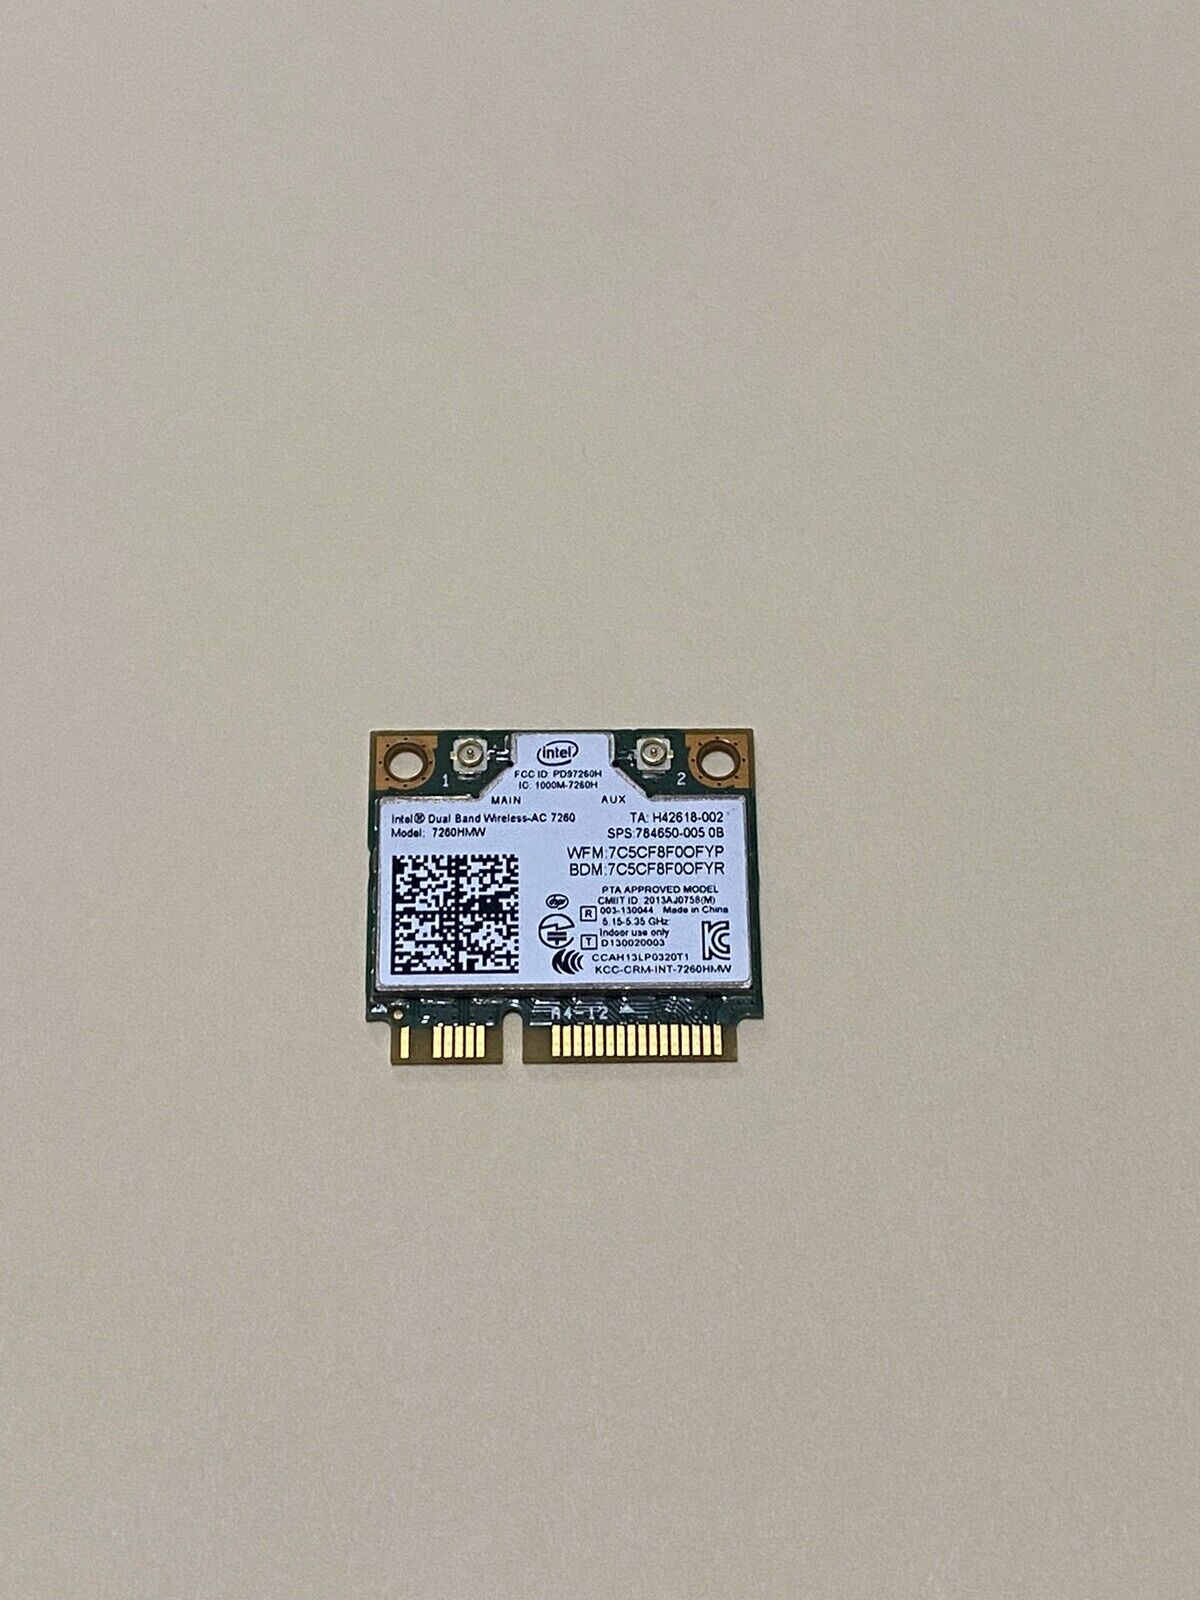 Intel 7260HMW Dual Band Wireless WiFi Card